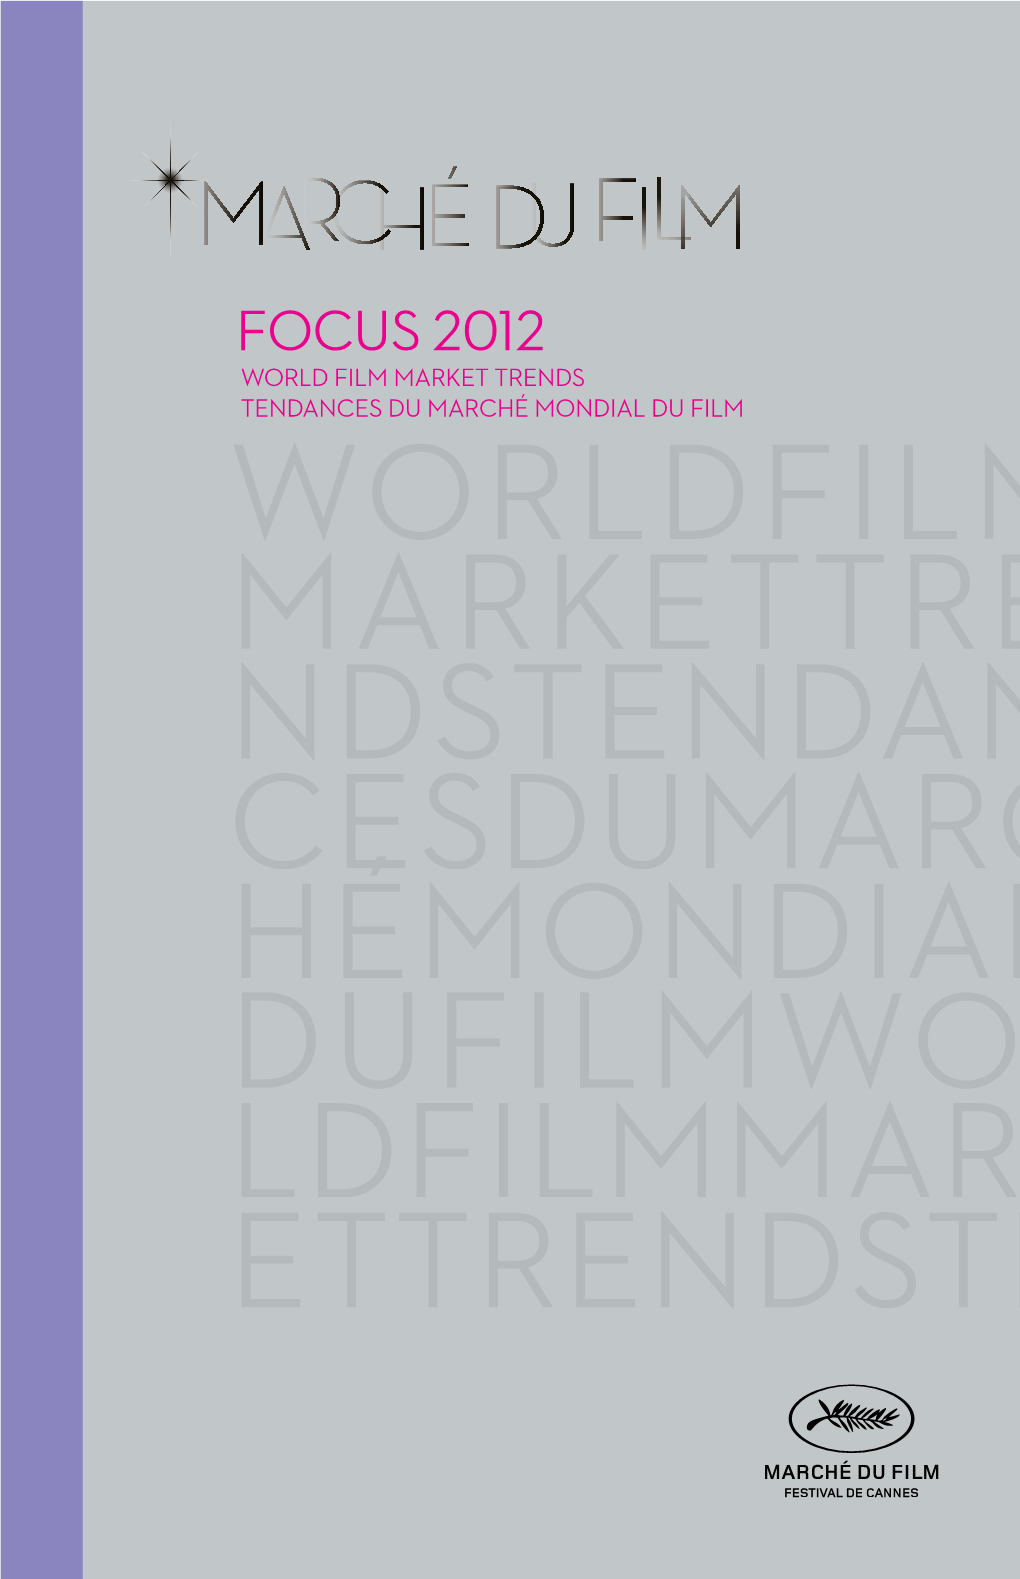 FOCUS 2012 World Film Market Trends